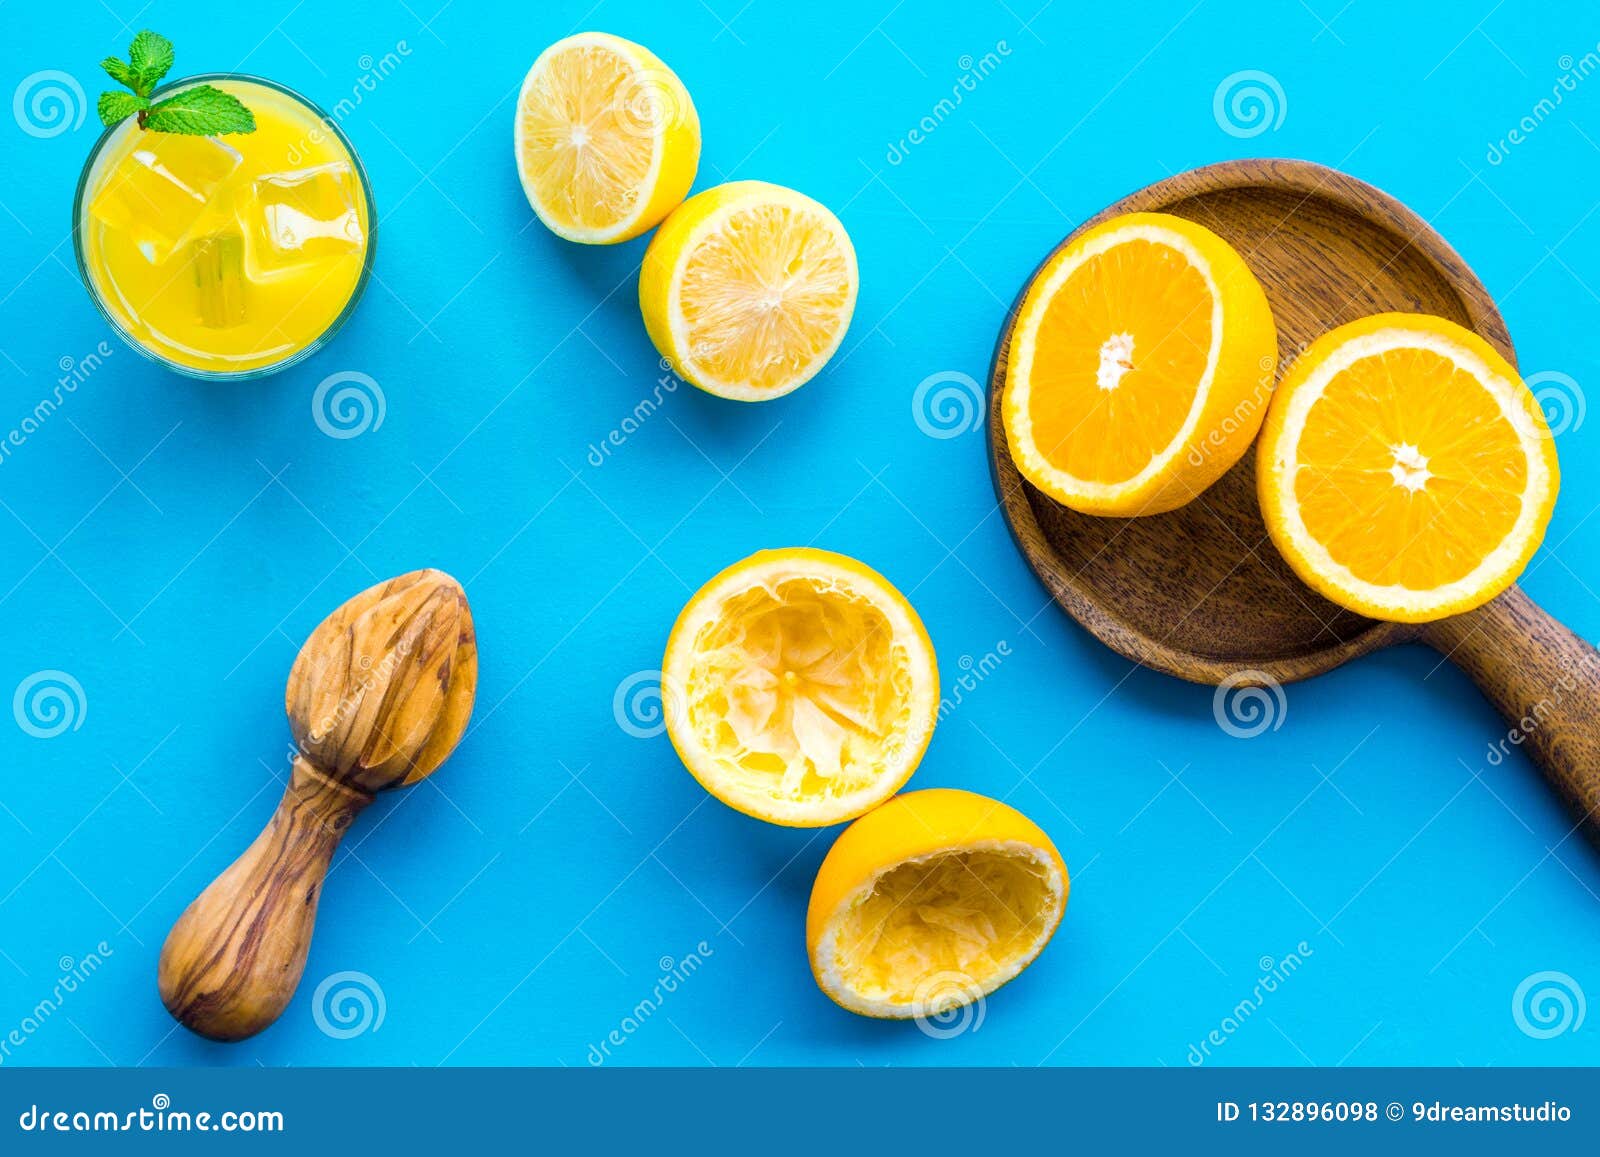 Squeeze Fresh Oranges With Juicer. Orange Juice In Glass Near Half Cut Oranges On Blue ...